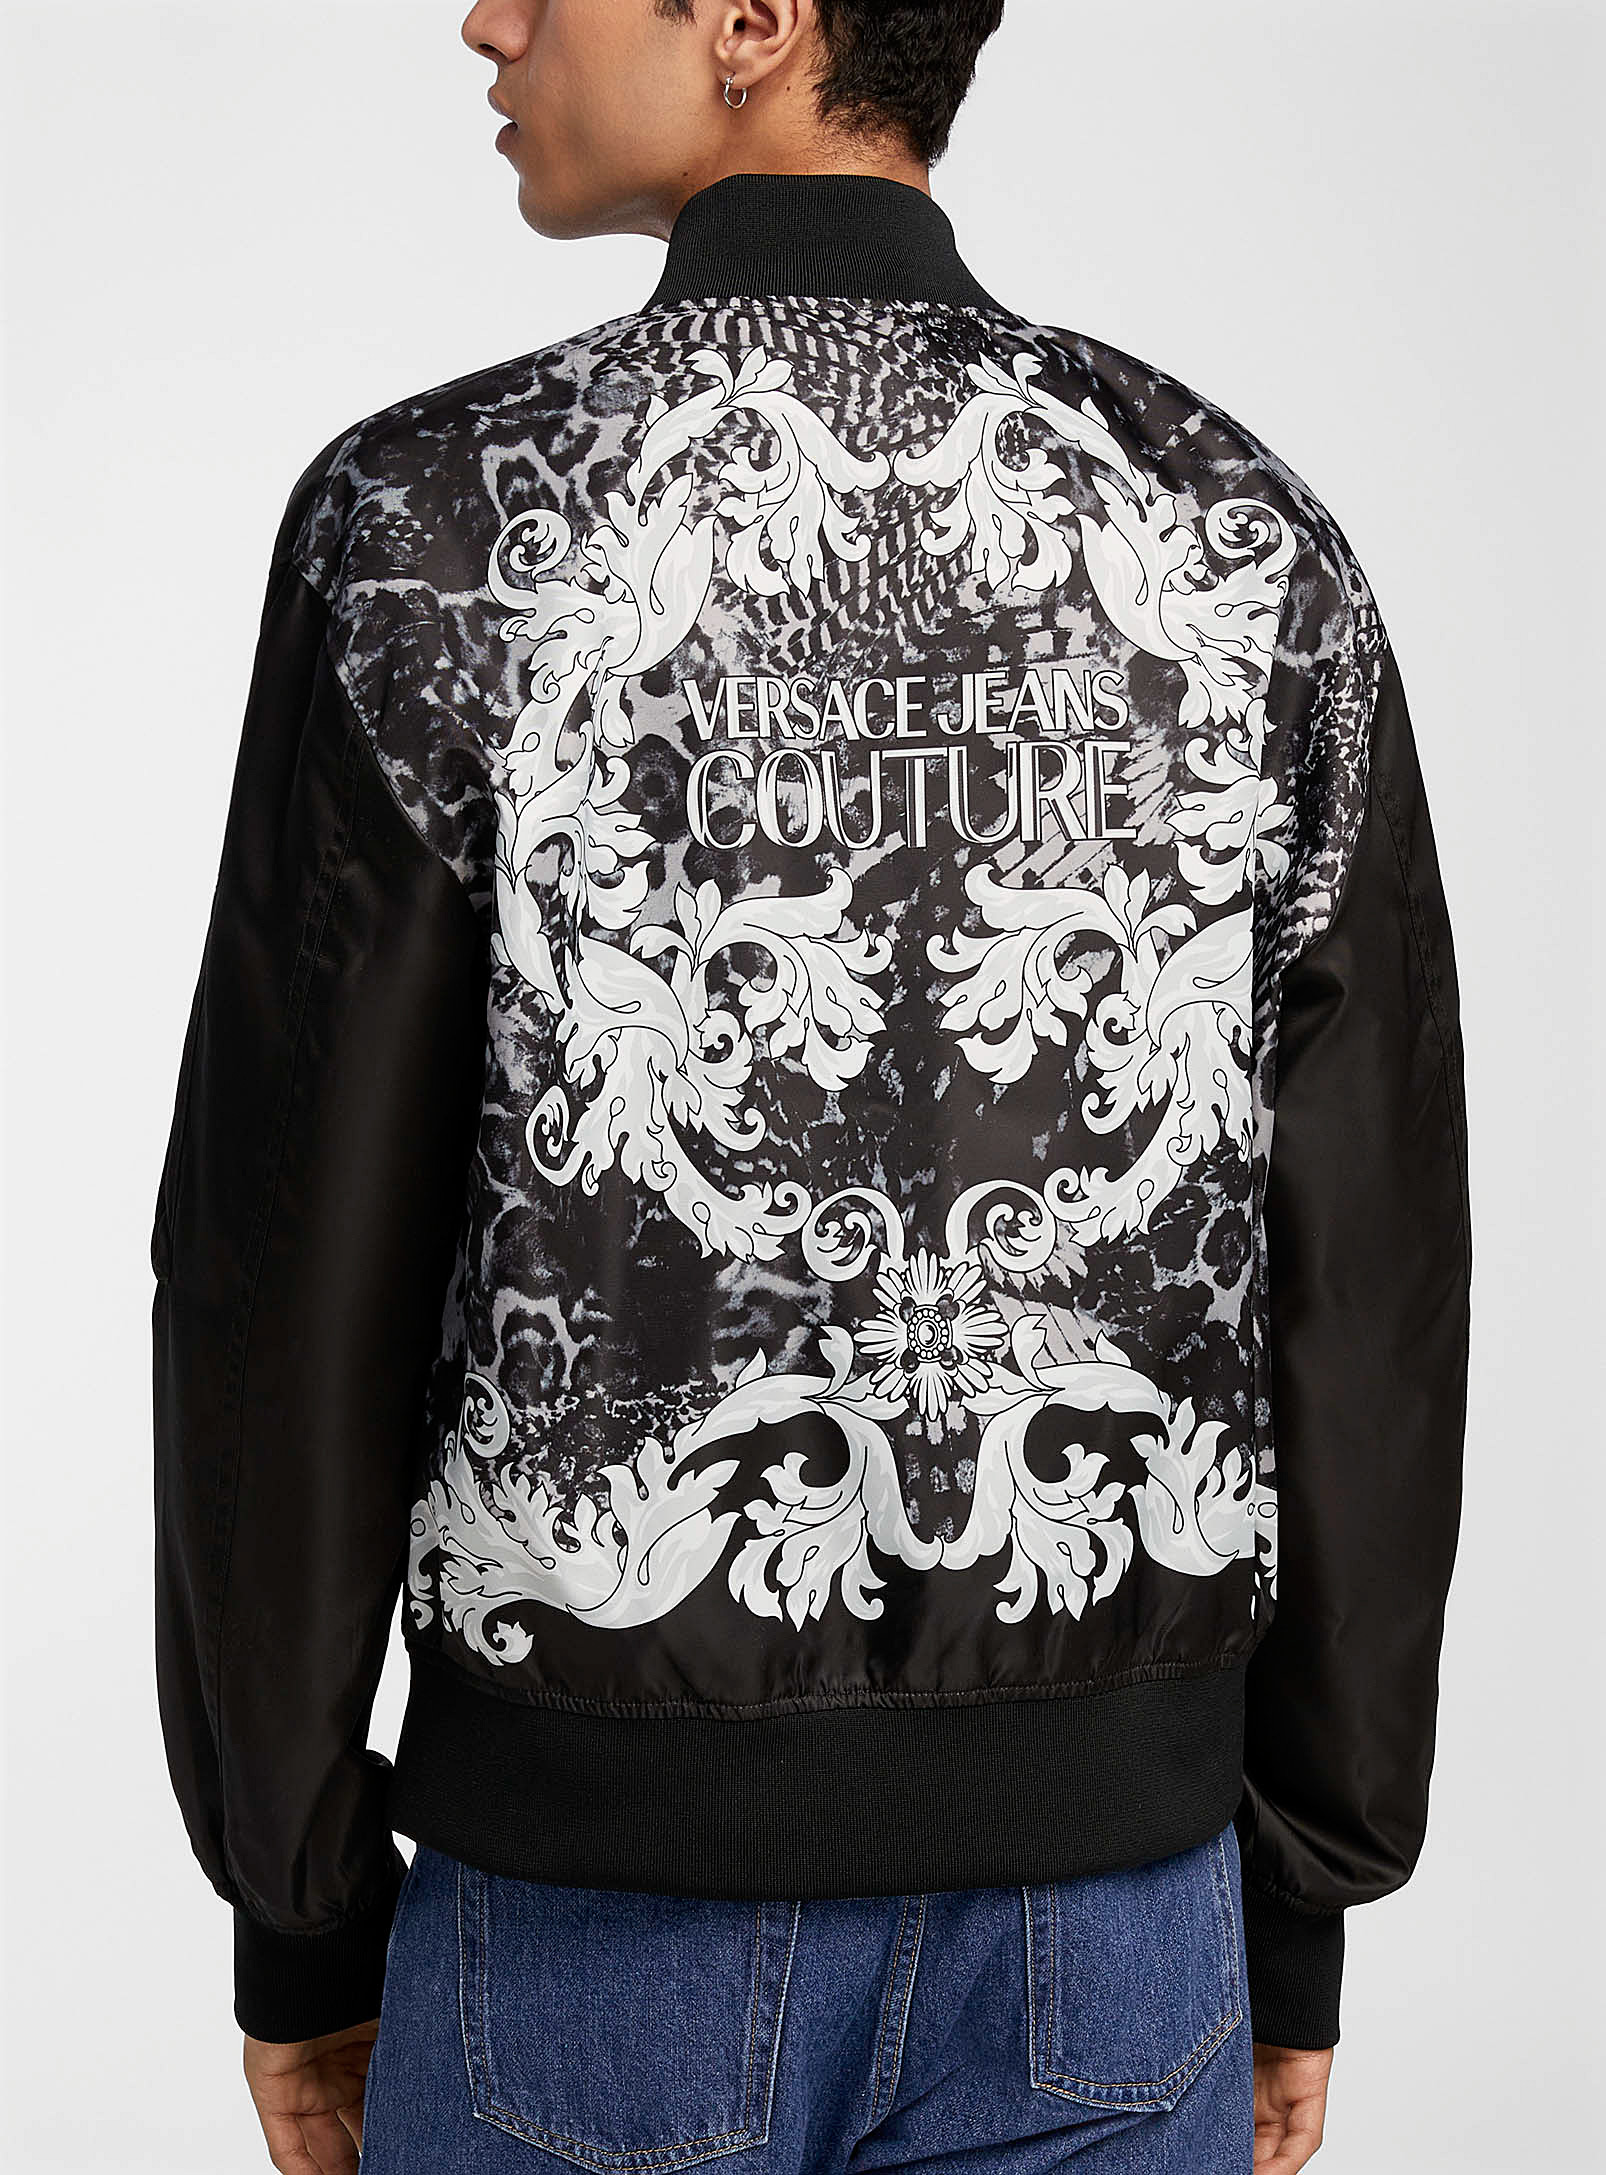 Versace Jeans Couture Back Logo Black Bomber Jacket